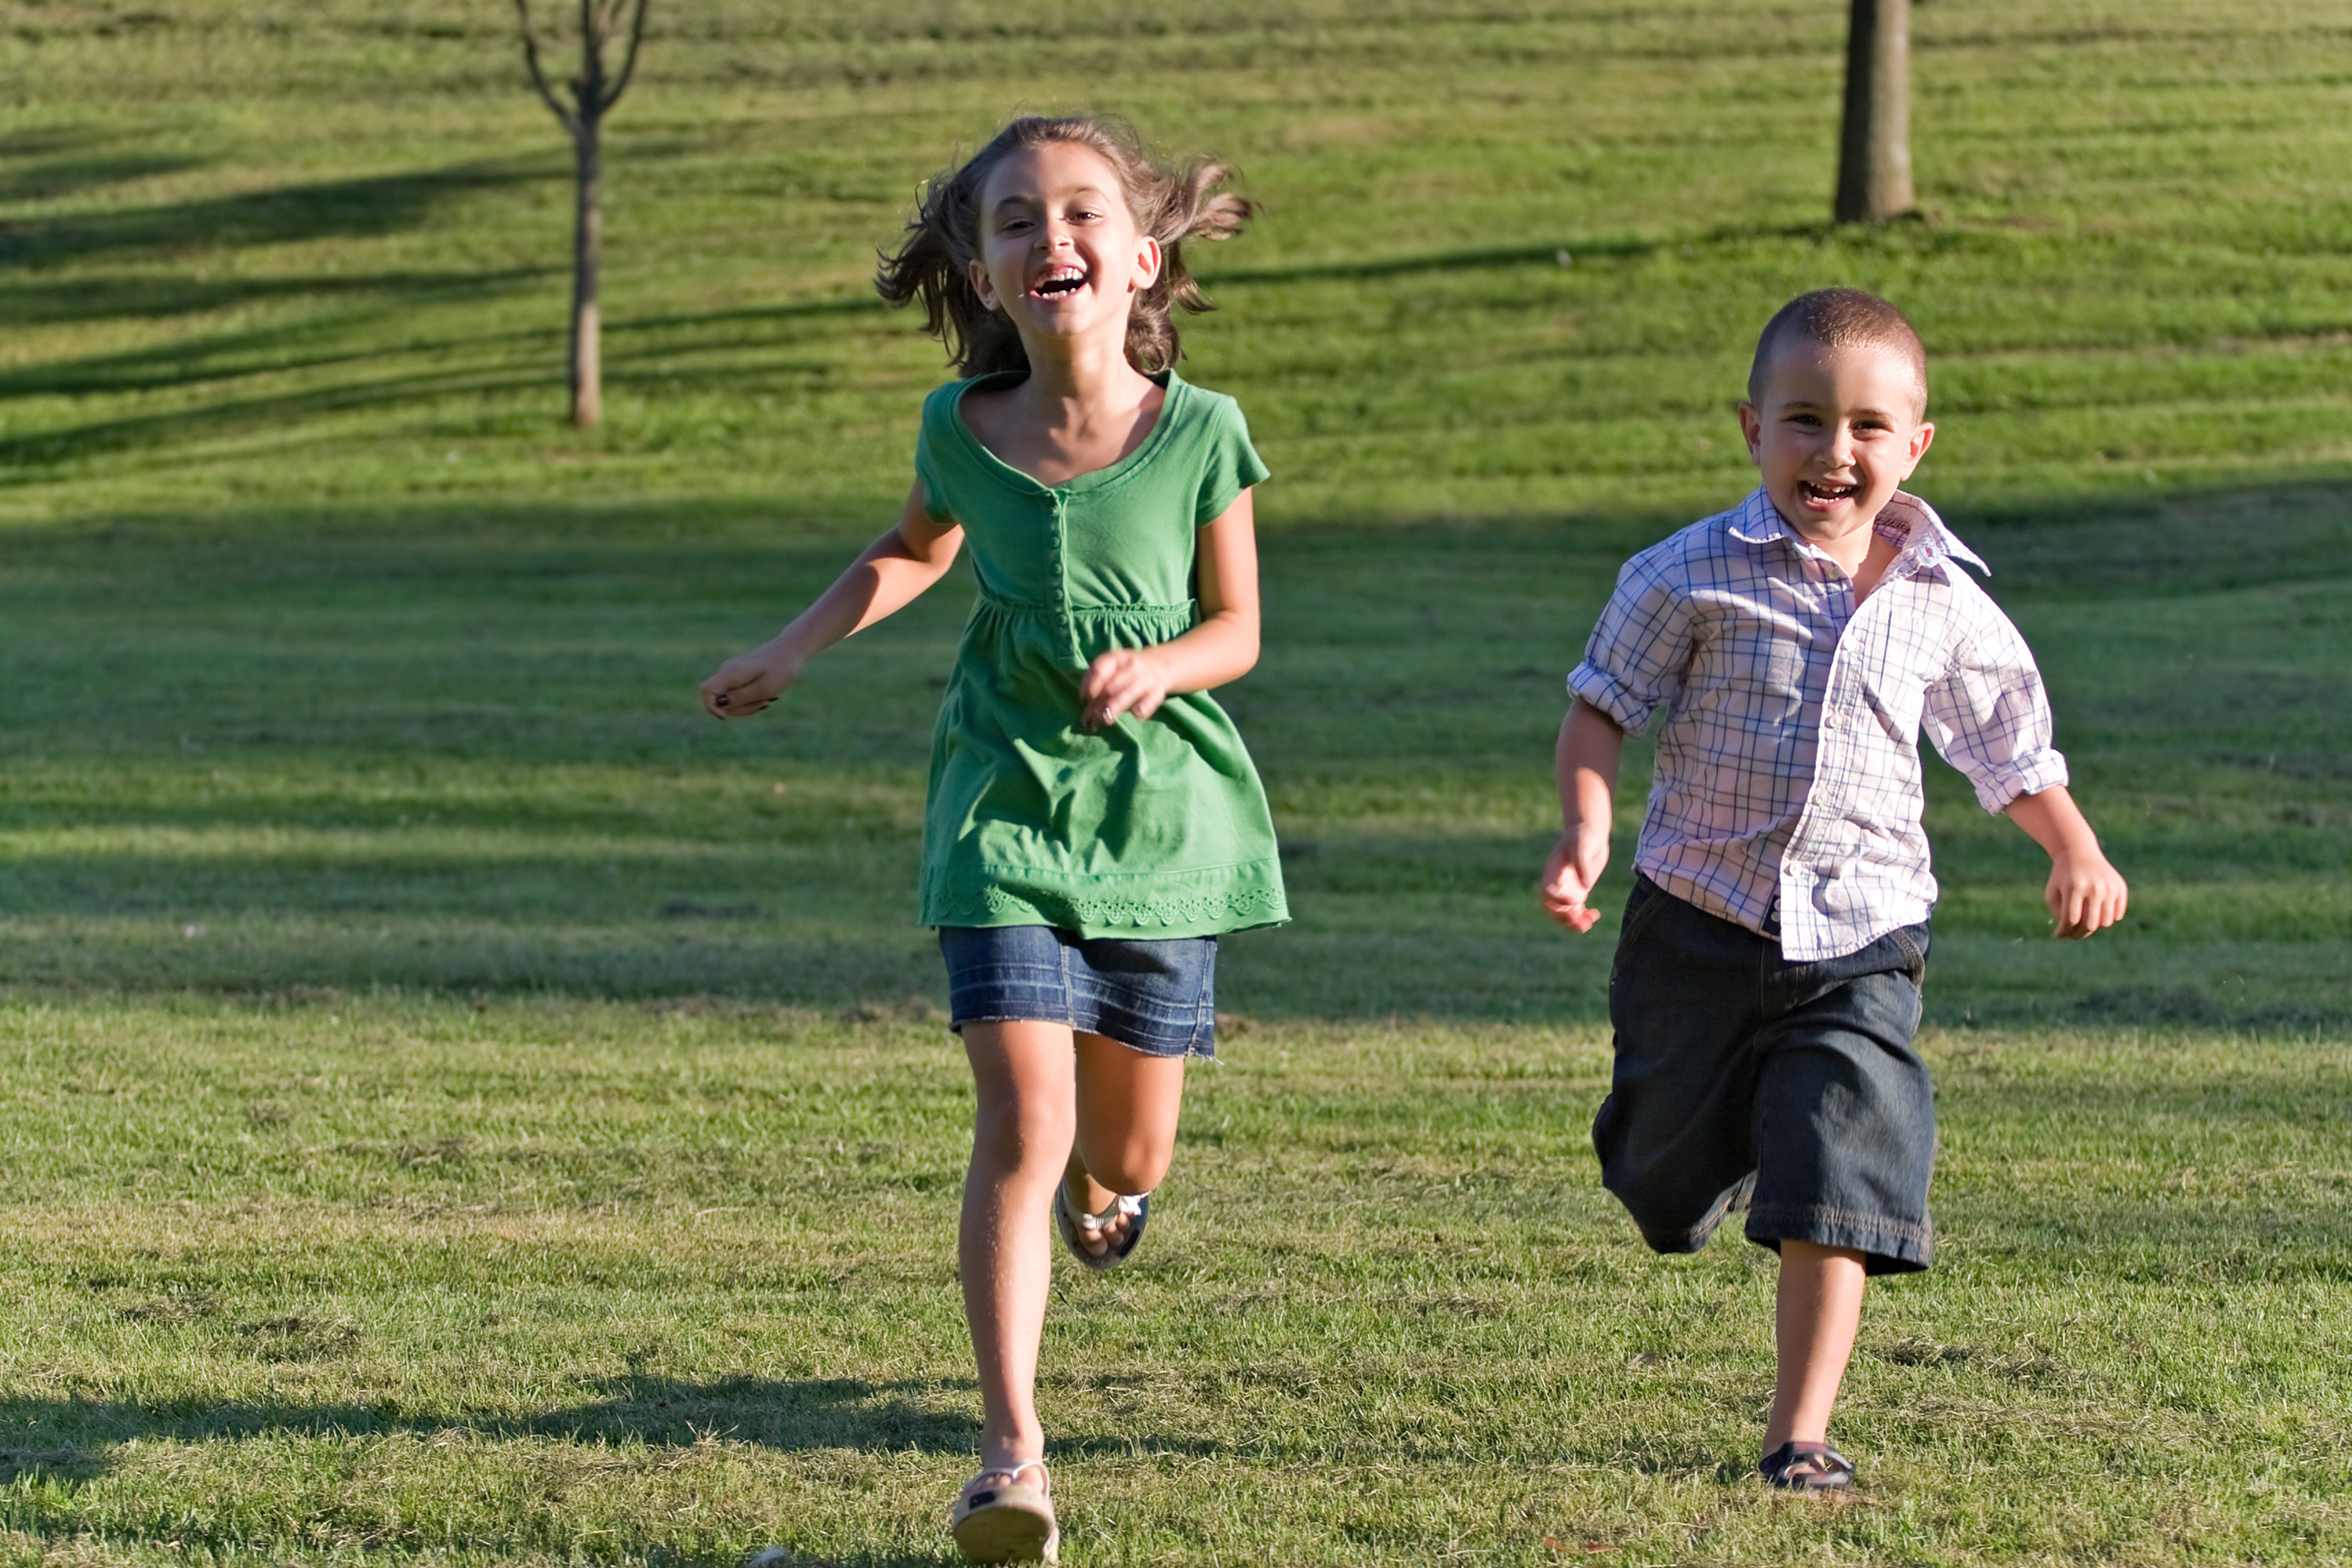 https://f.hubspotusercontent40.net/hubfs/2956241/happy-kids-running-through-grassy-field.jpg background-image